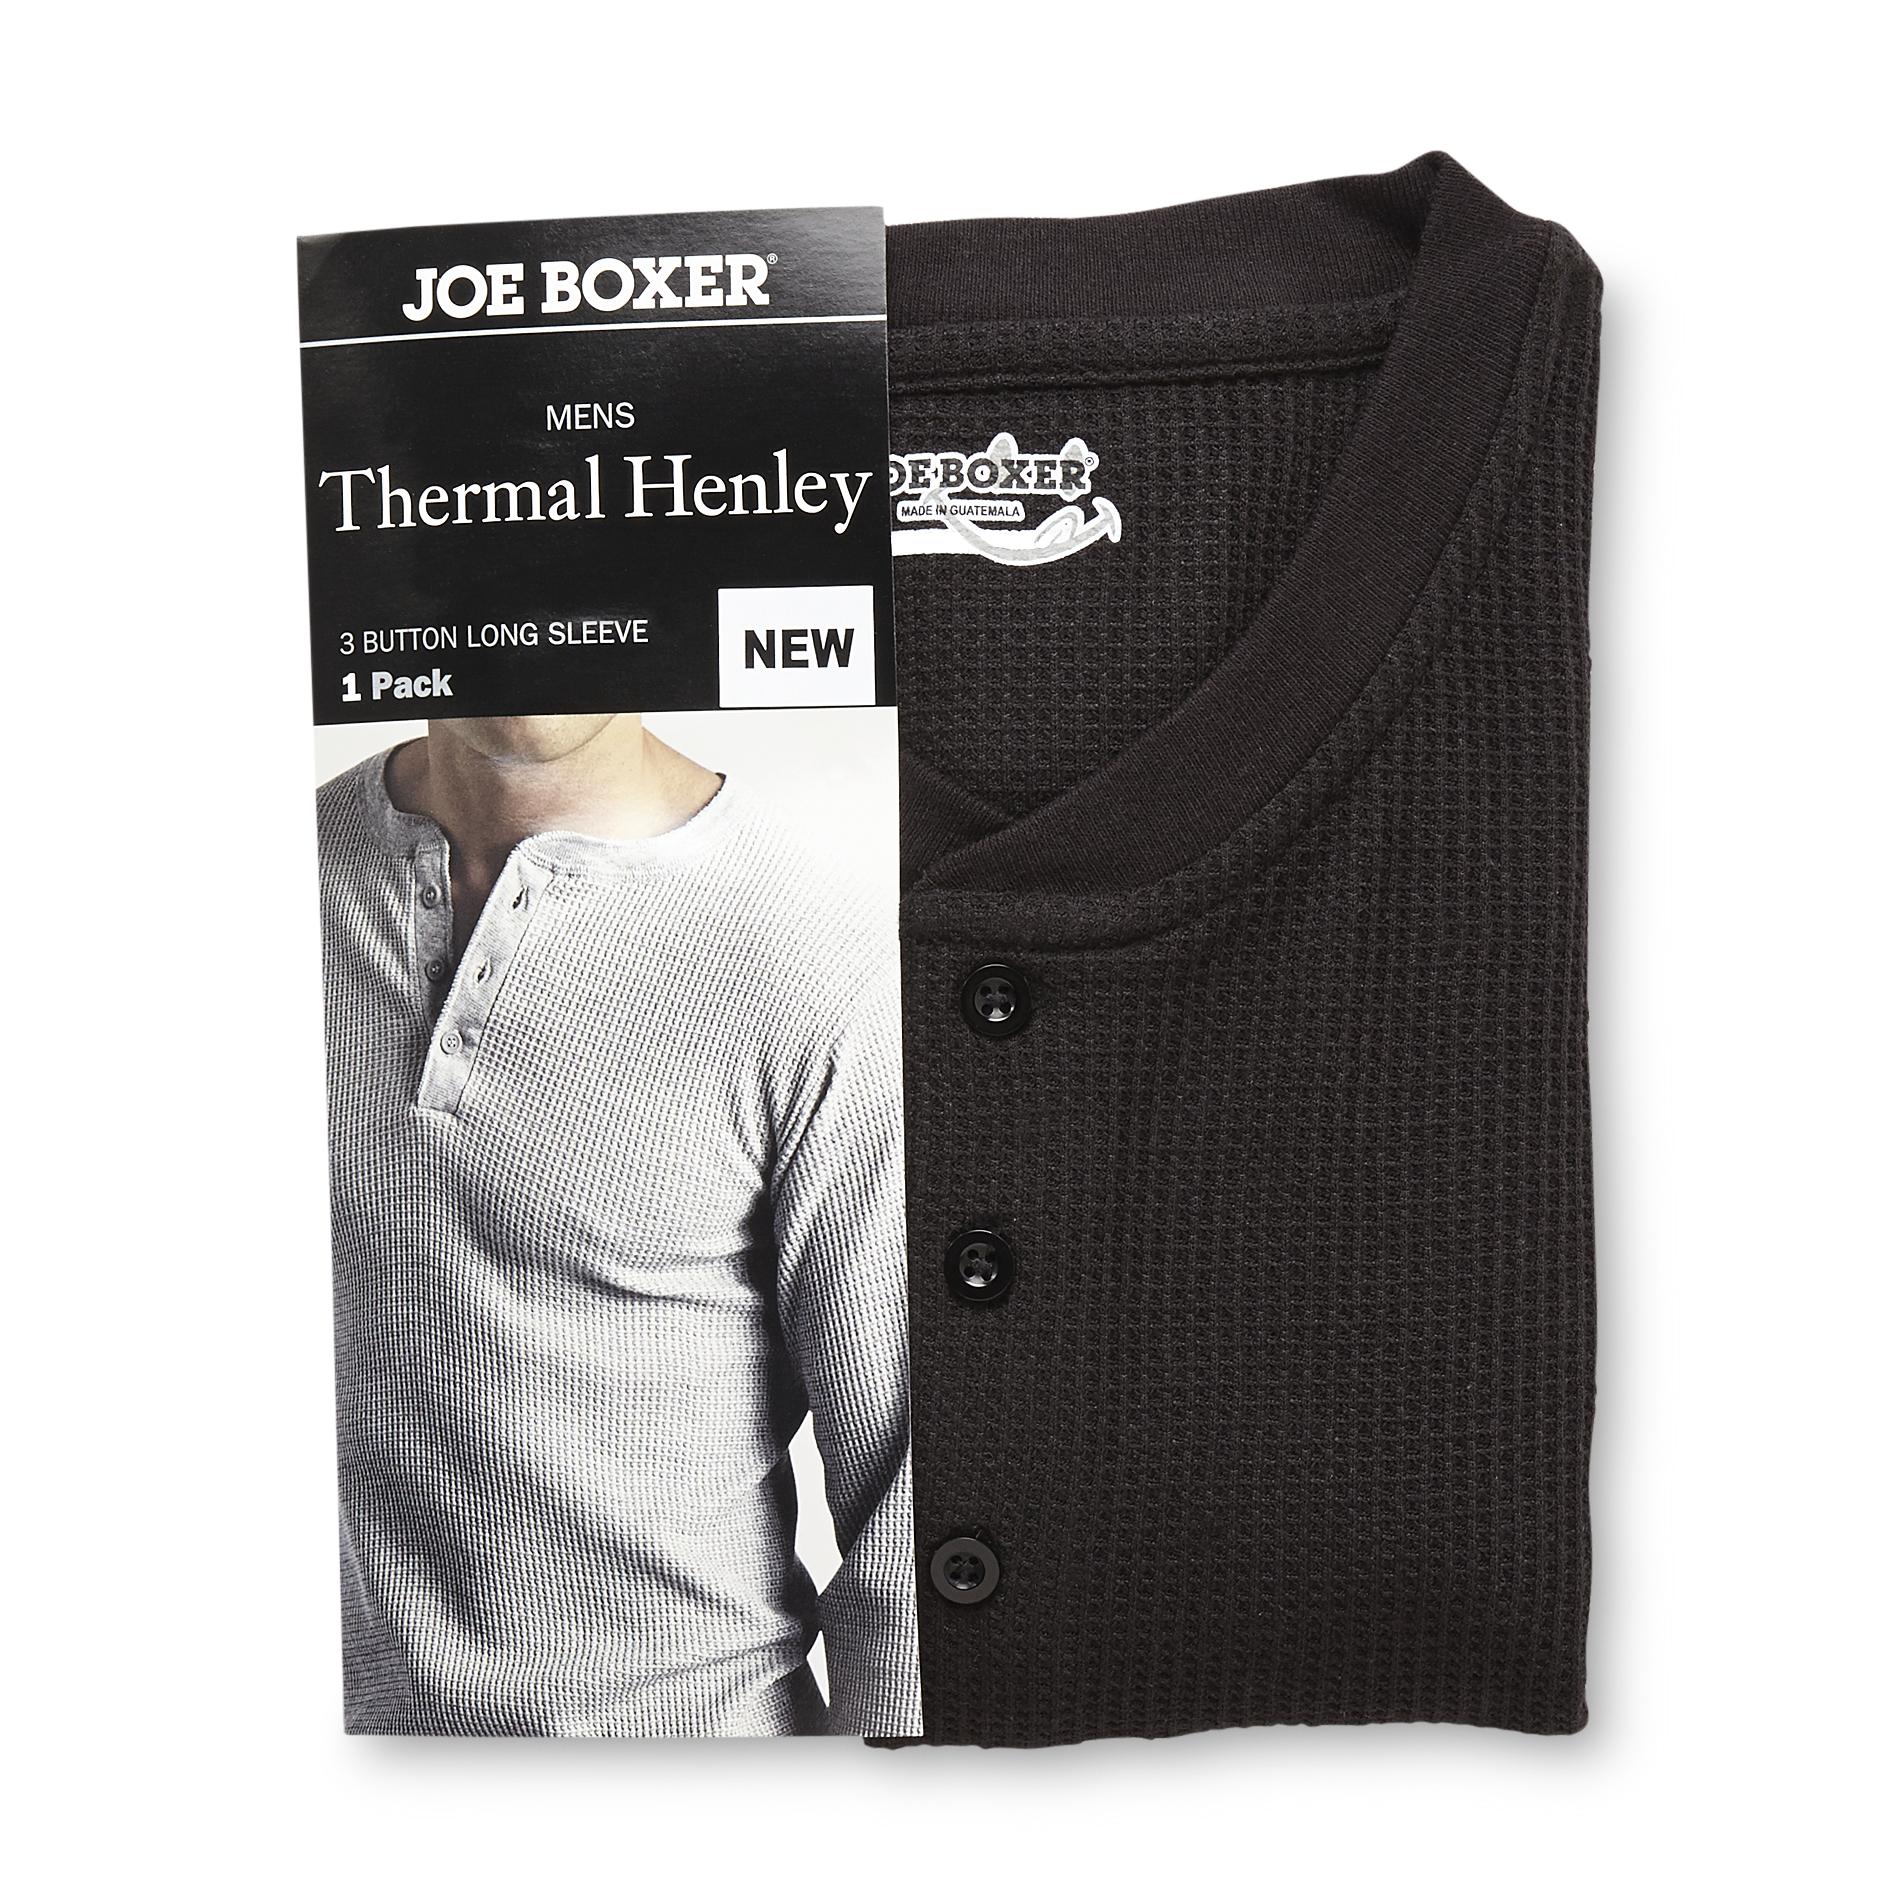 Joe Boxer Men's Thermal Henley Shirt